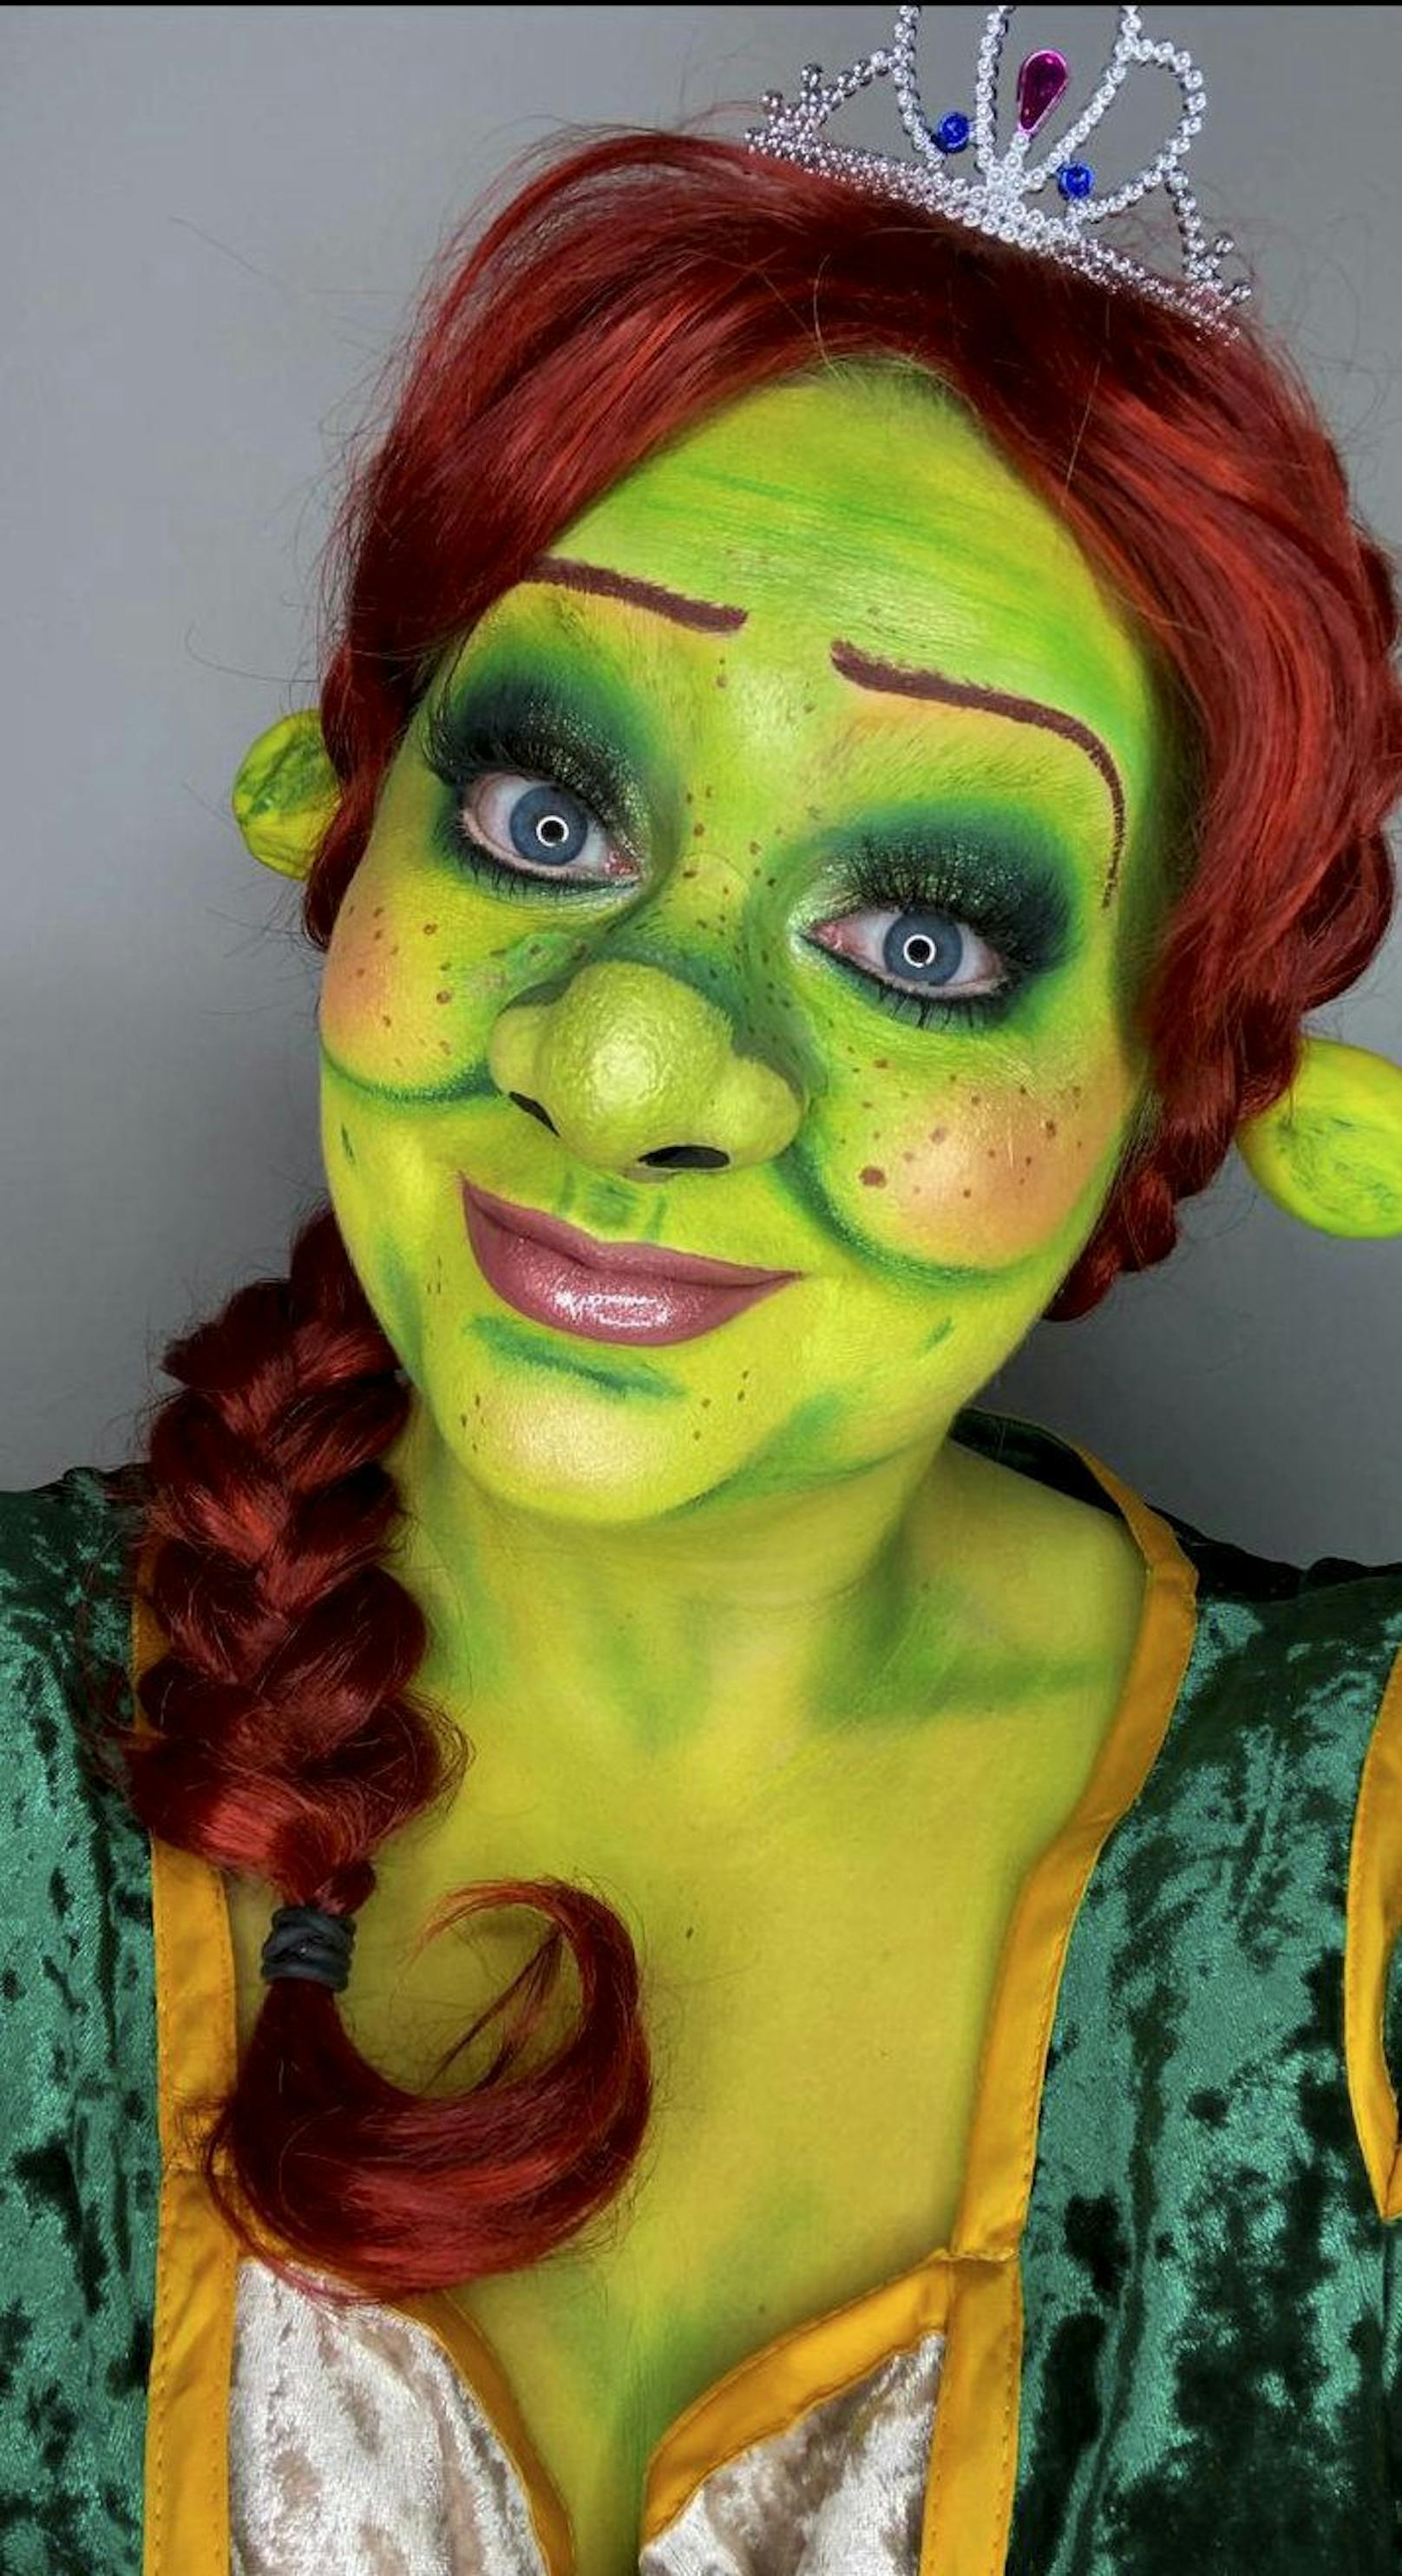 Prinzessin Fiona aus "Shrek"